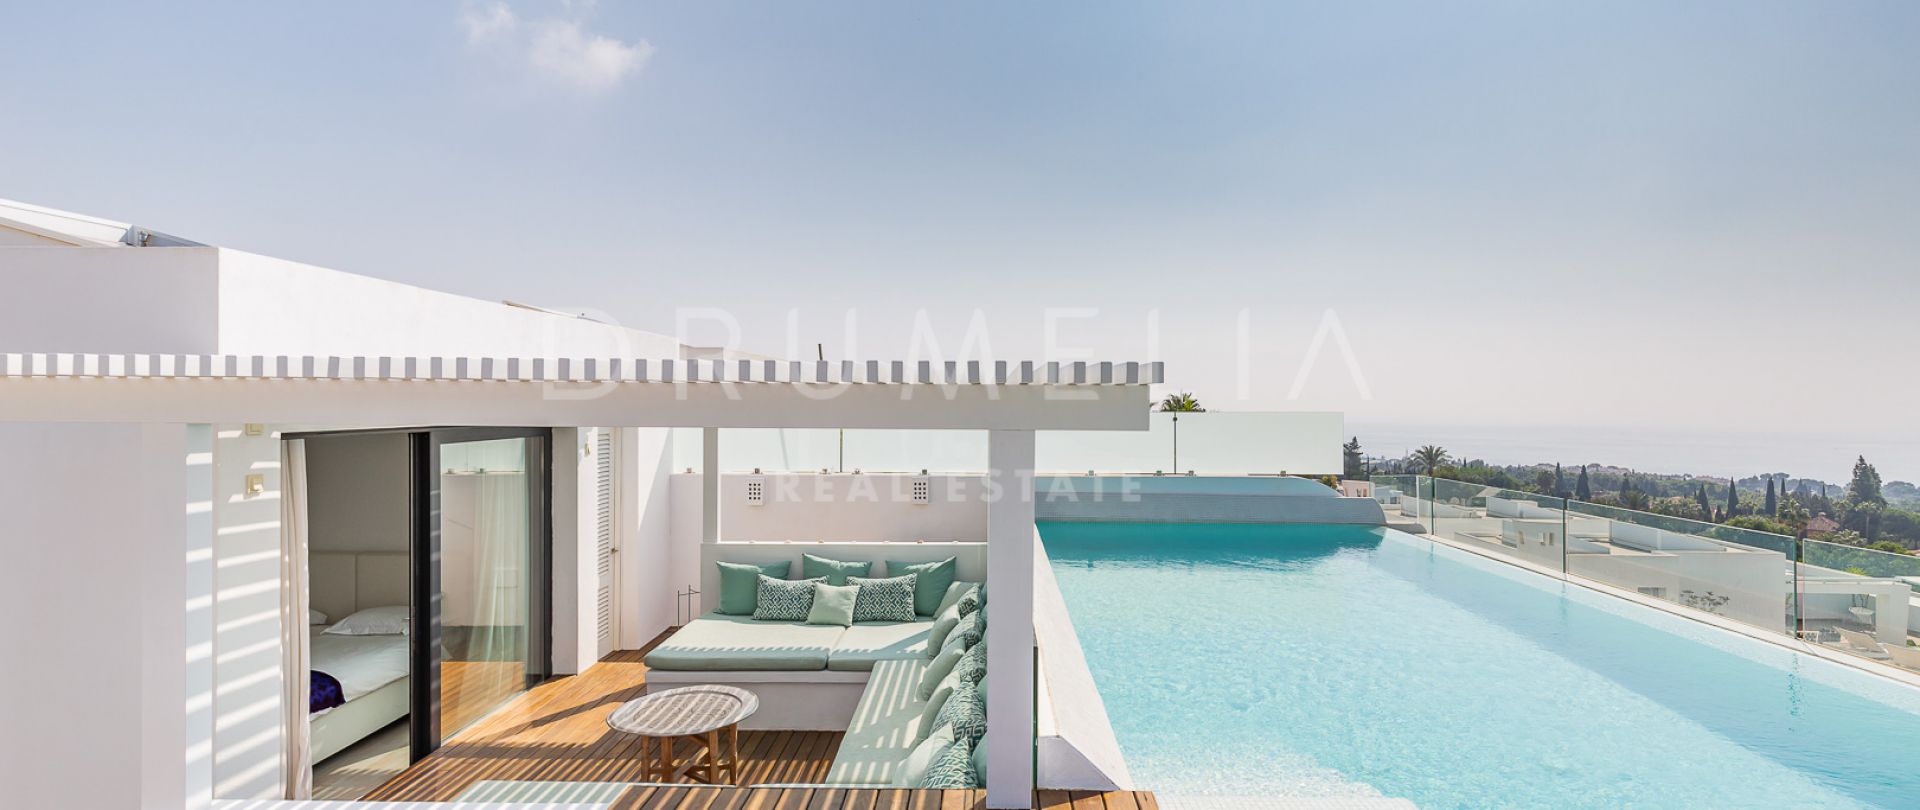 Excellent Modern Luxury 2-level Penthouse,La Reserva de Sierra Blanca, Marbella